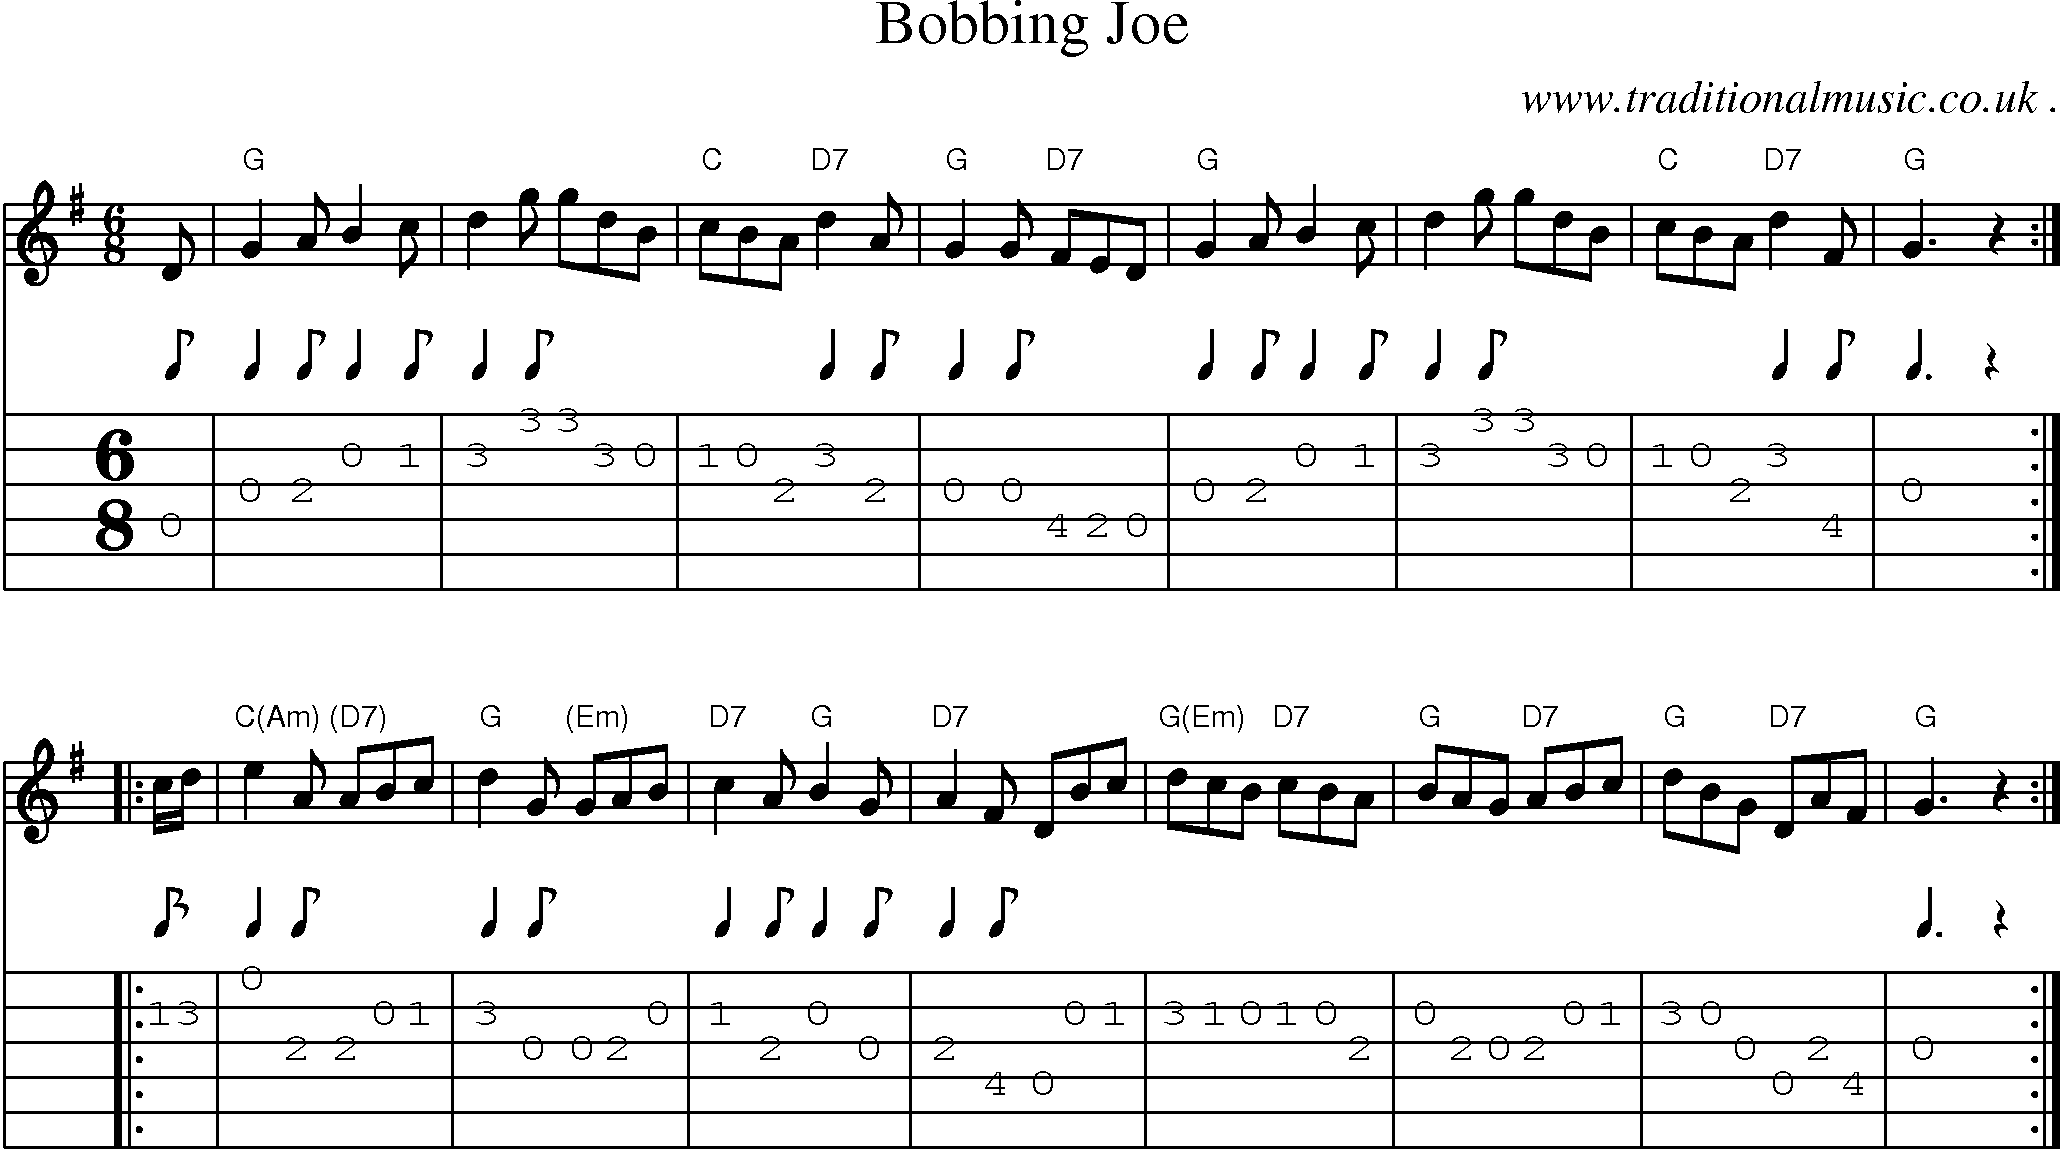 Sheet-music  score, Chords and Guitar Tabs for Bobbing Joe